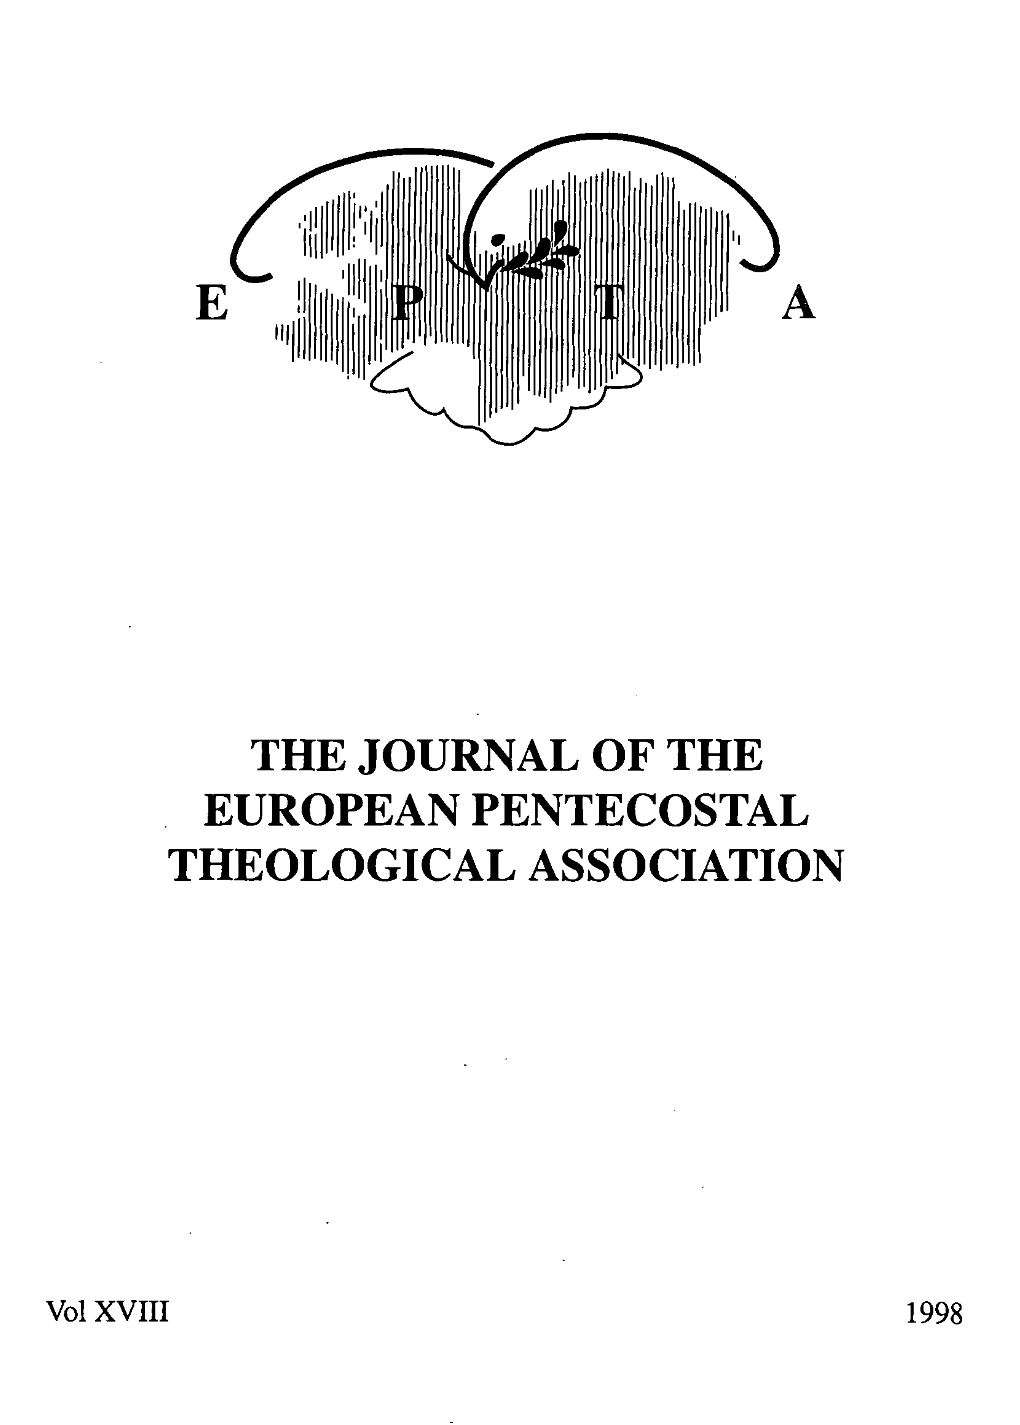 European Pentecostal Theological Association